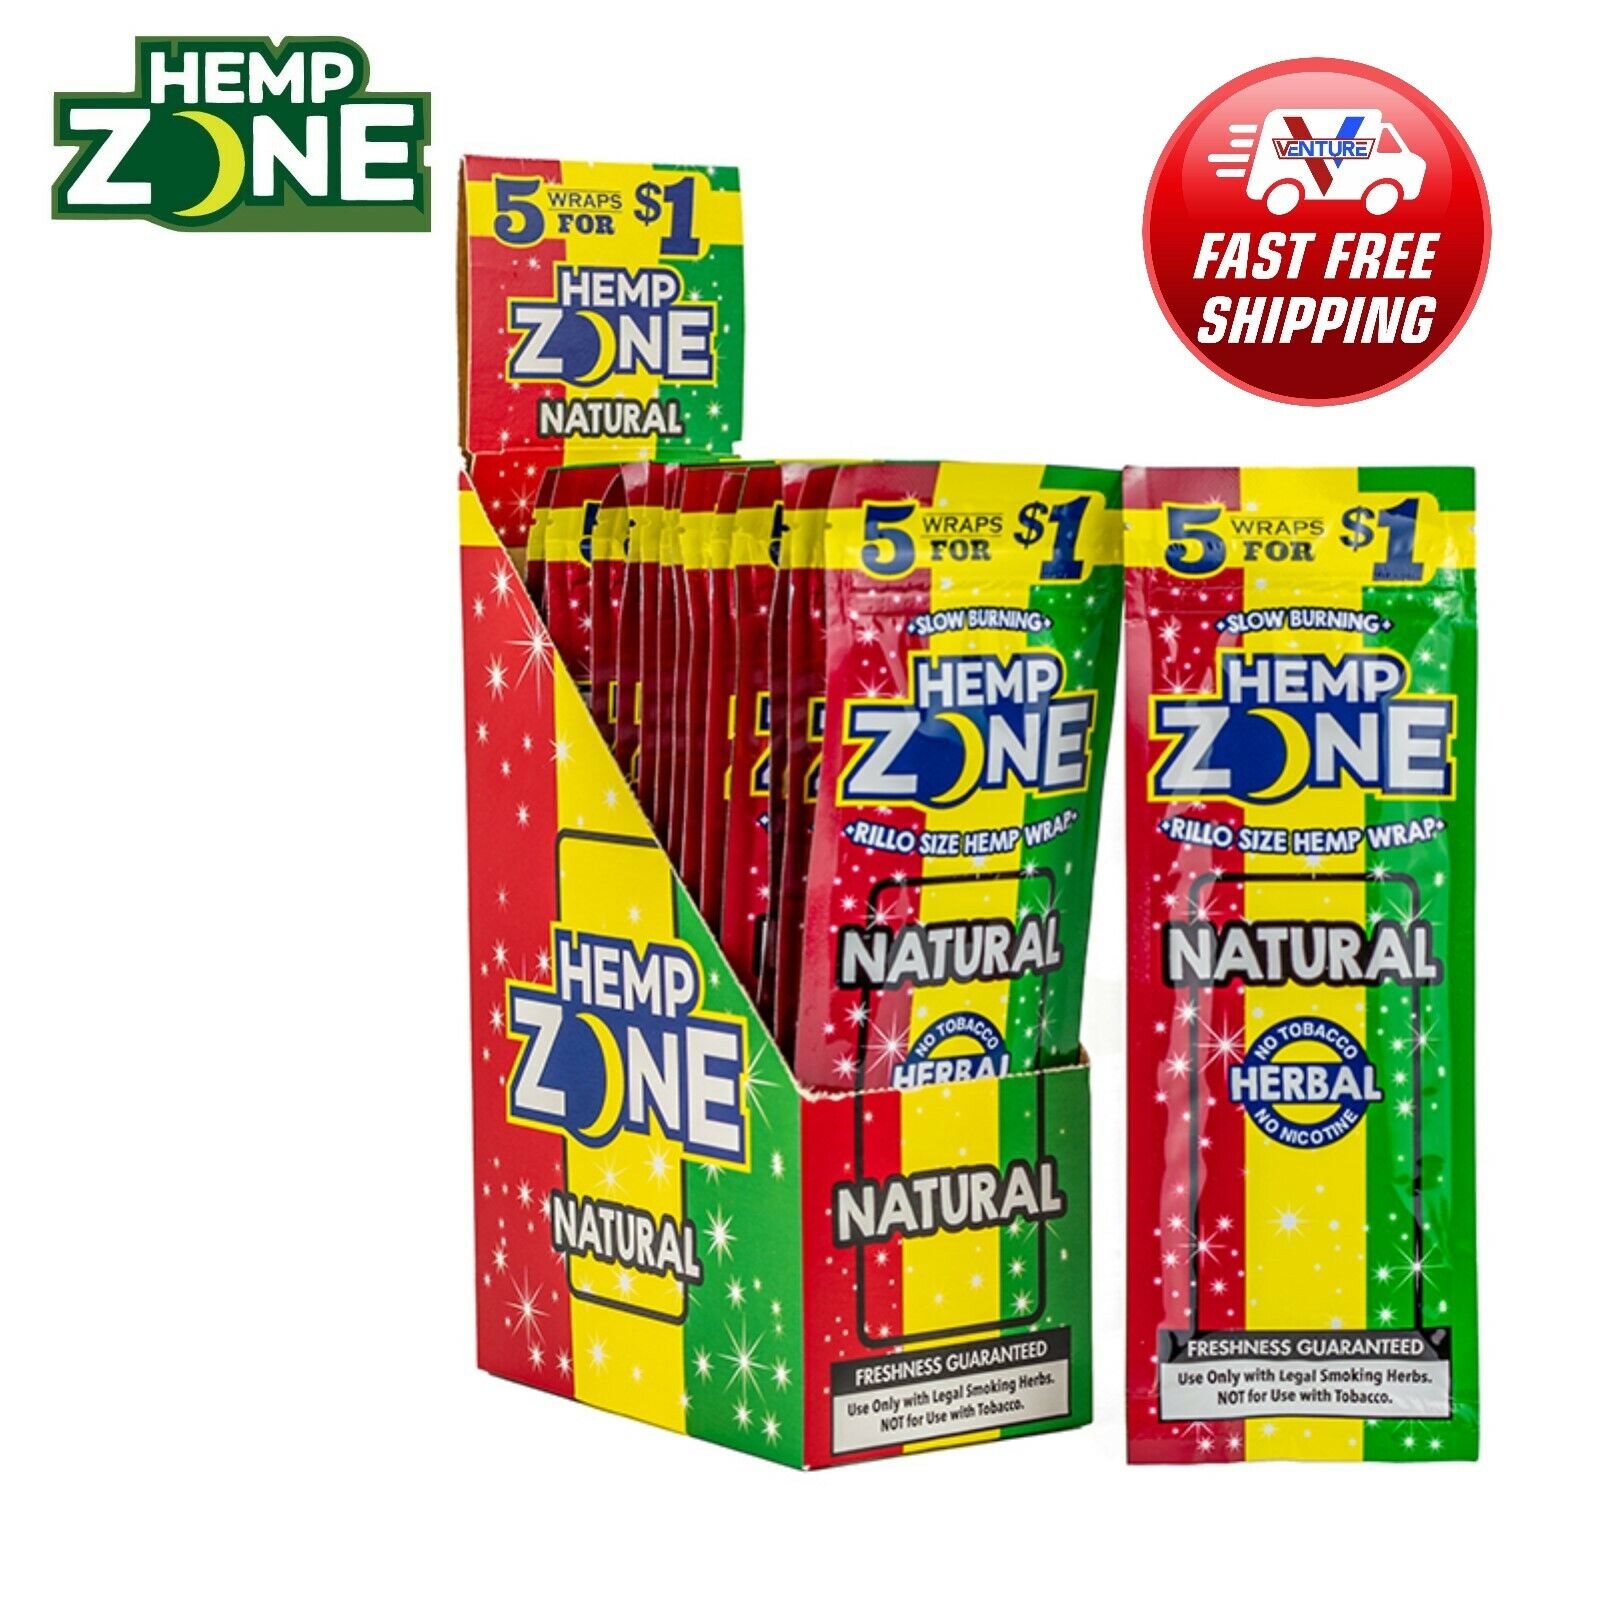 H. Zone Organic Herbal Wrap NATURAL Full Box 15/5CT - 75 Wraps Total 